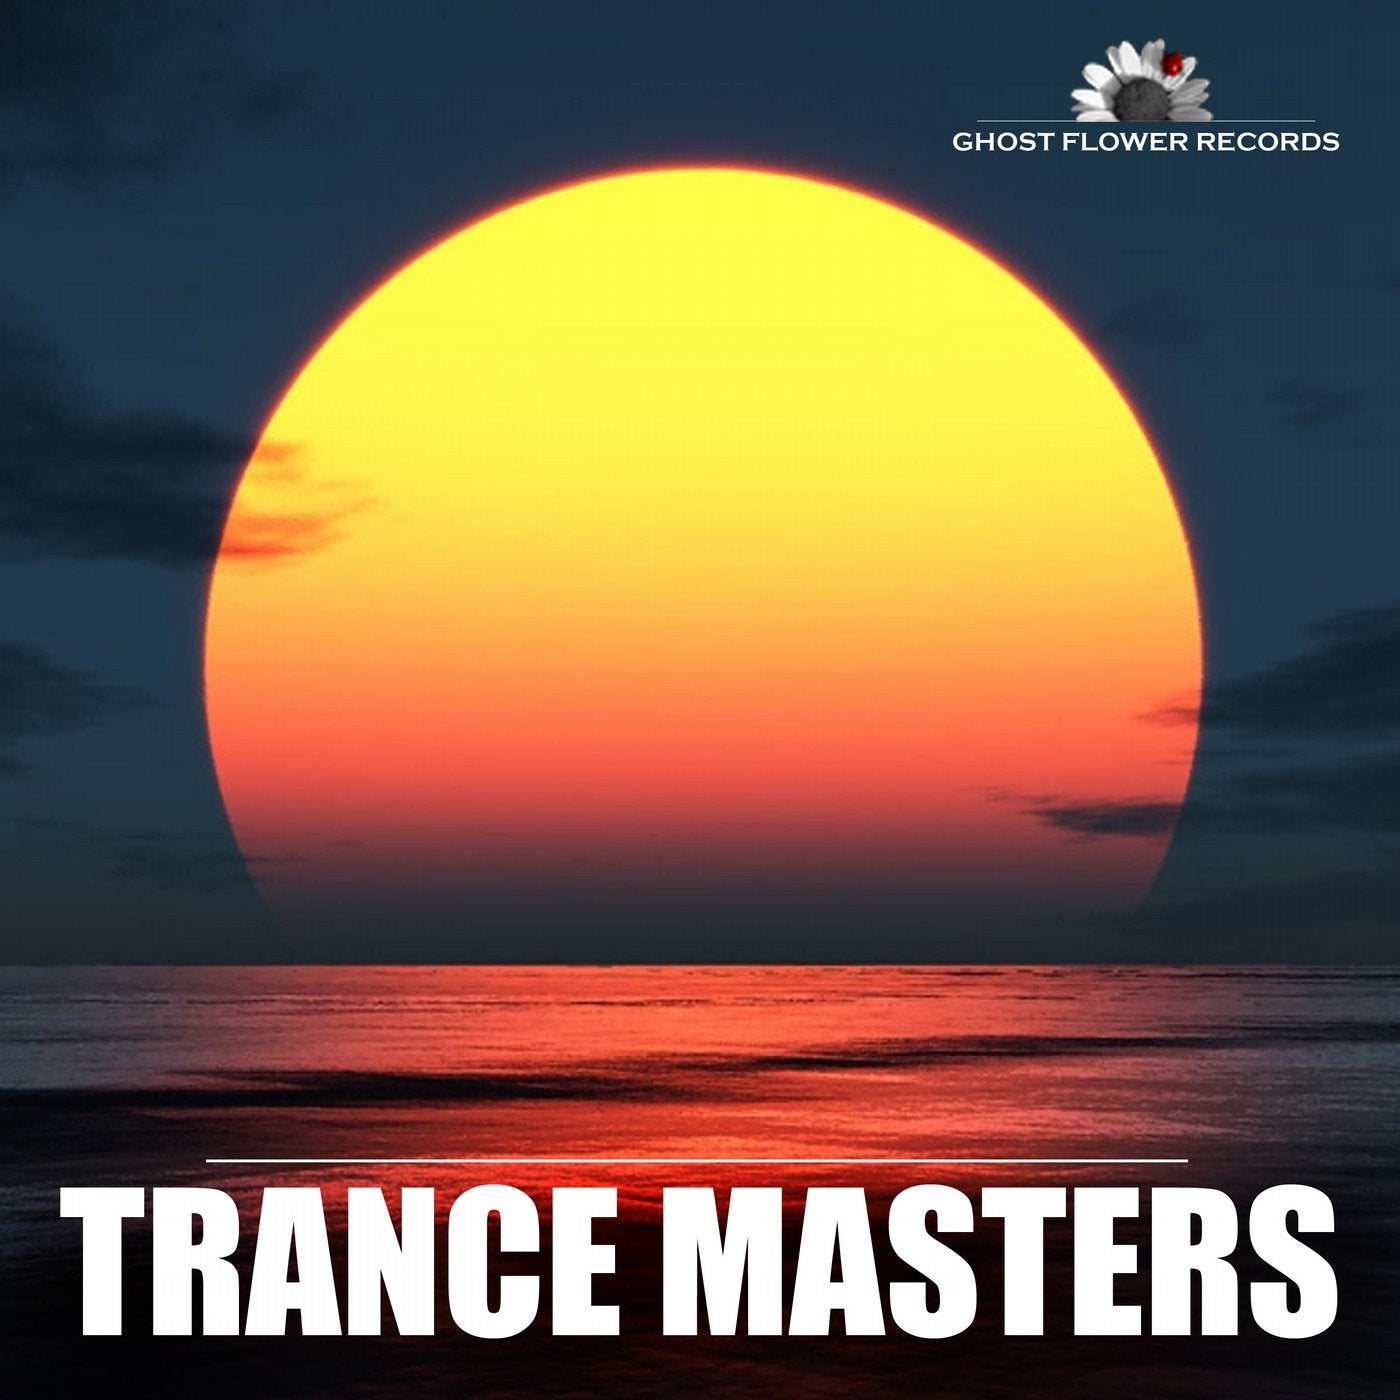 Trance Masters